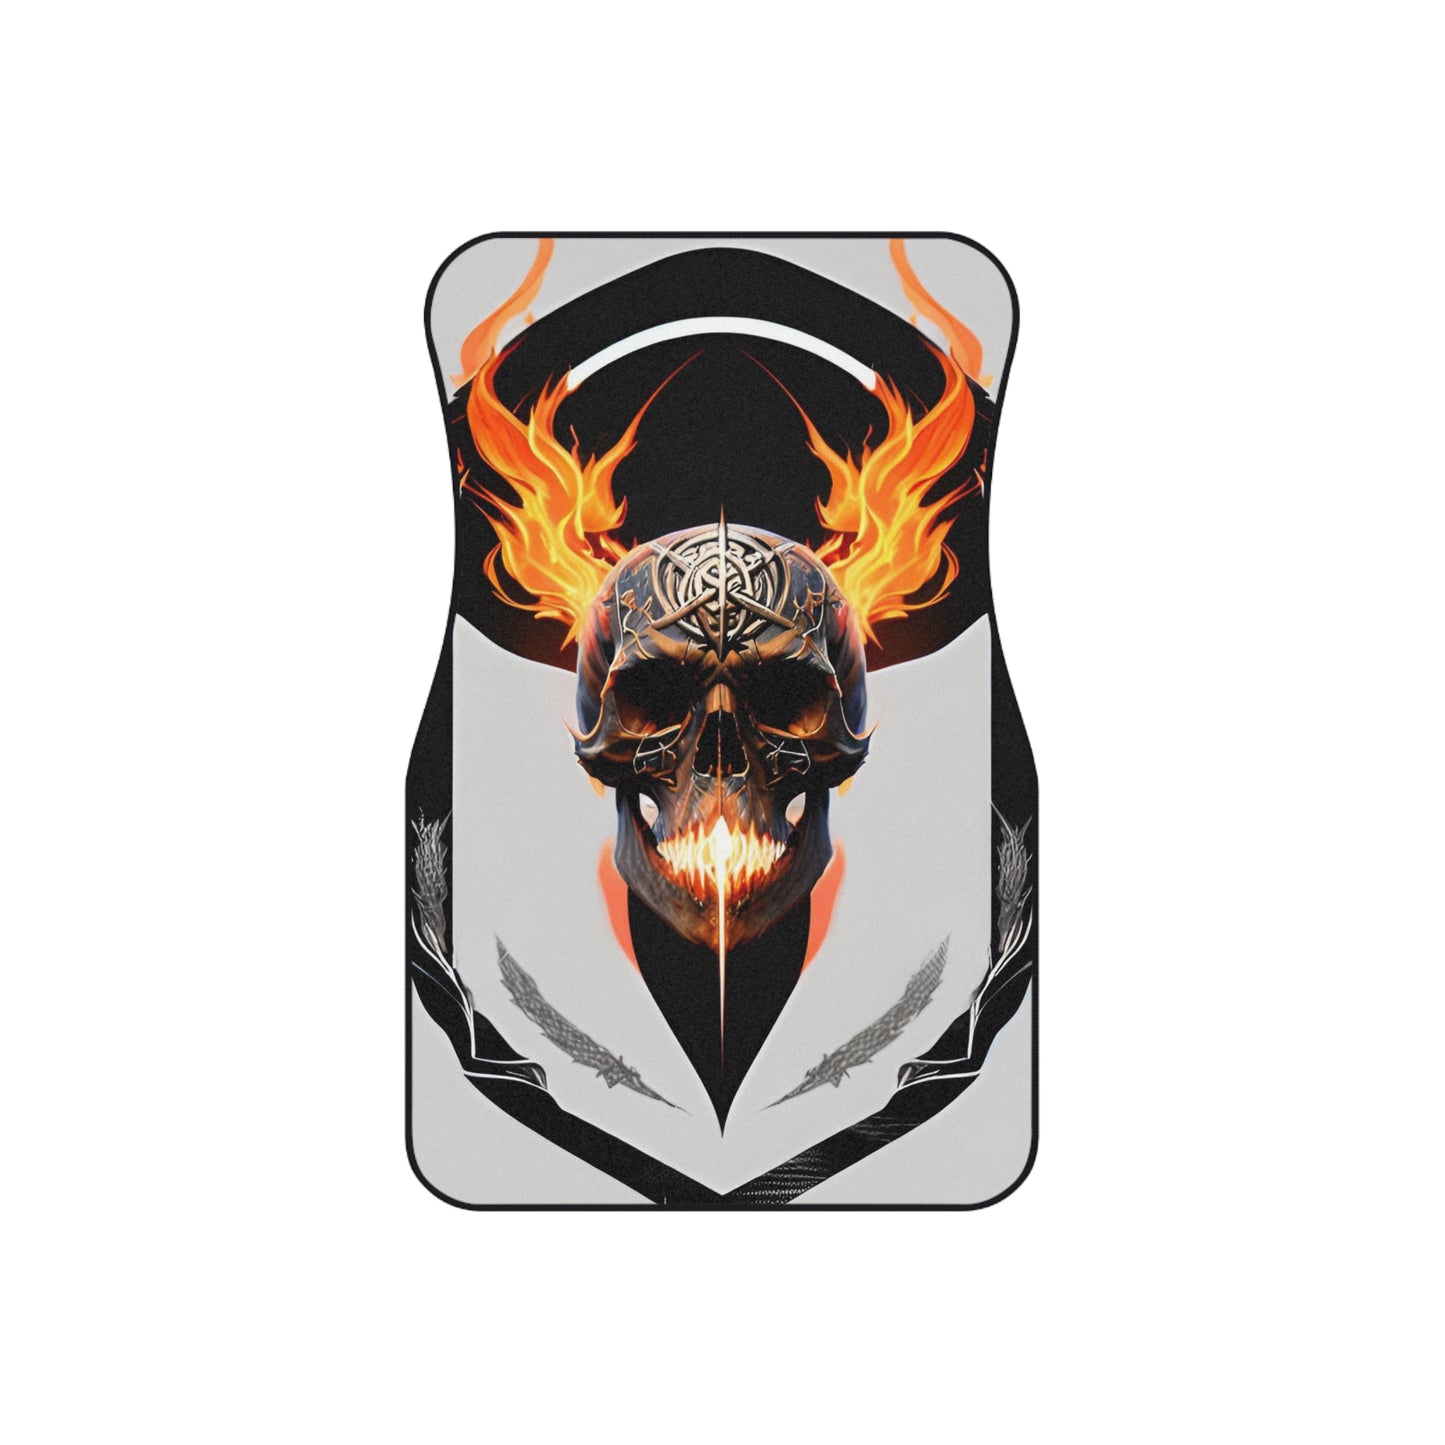 Flaming Skull Car Mats (Set of 4)